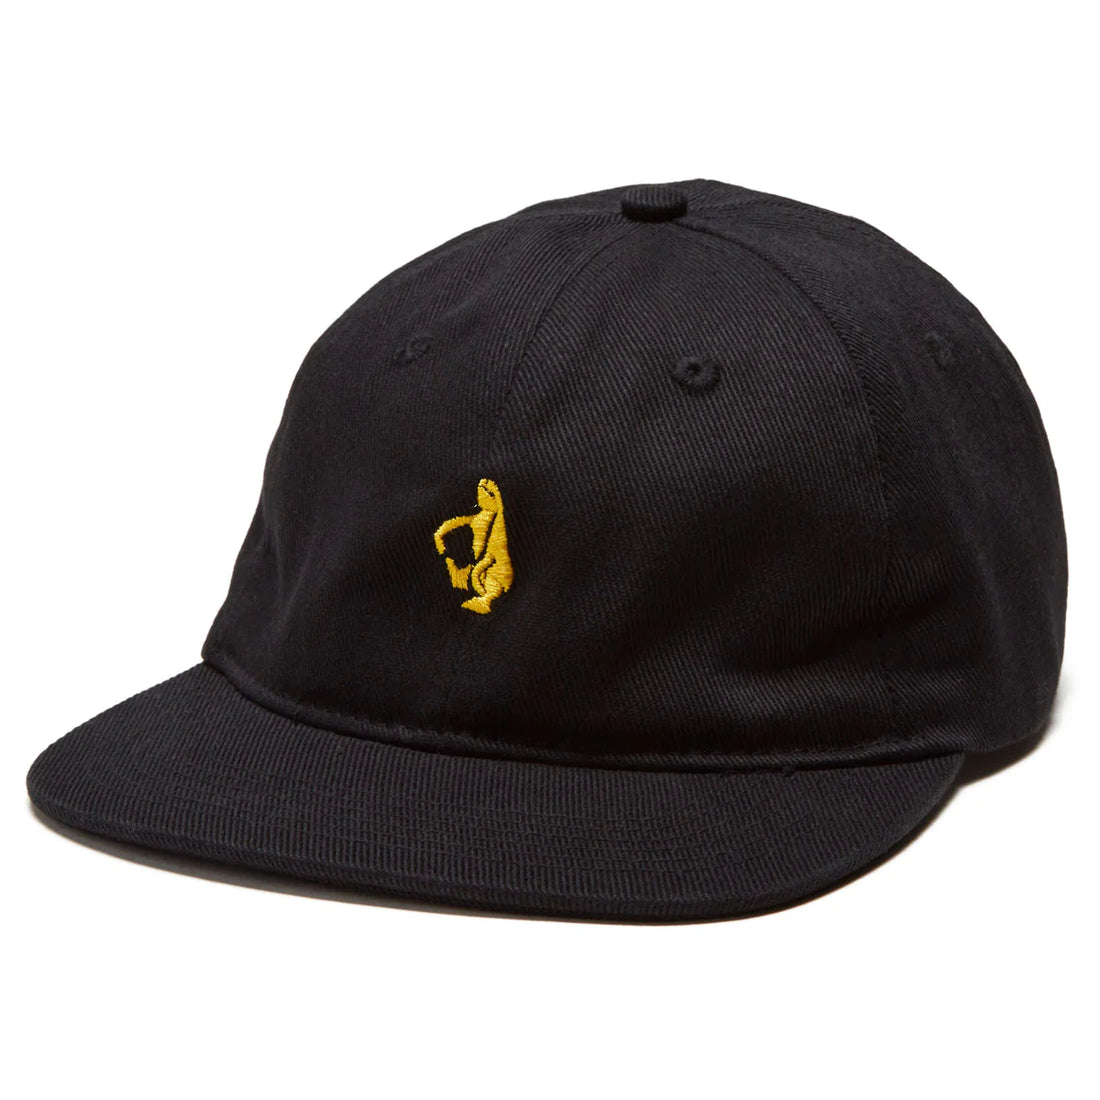 Krooked Shmolo 6 Panel Unstructured Snapback Hat (Black)